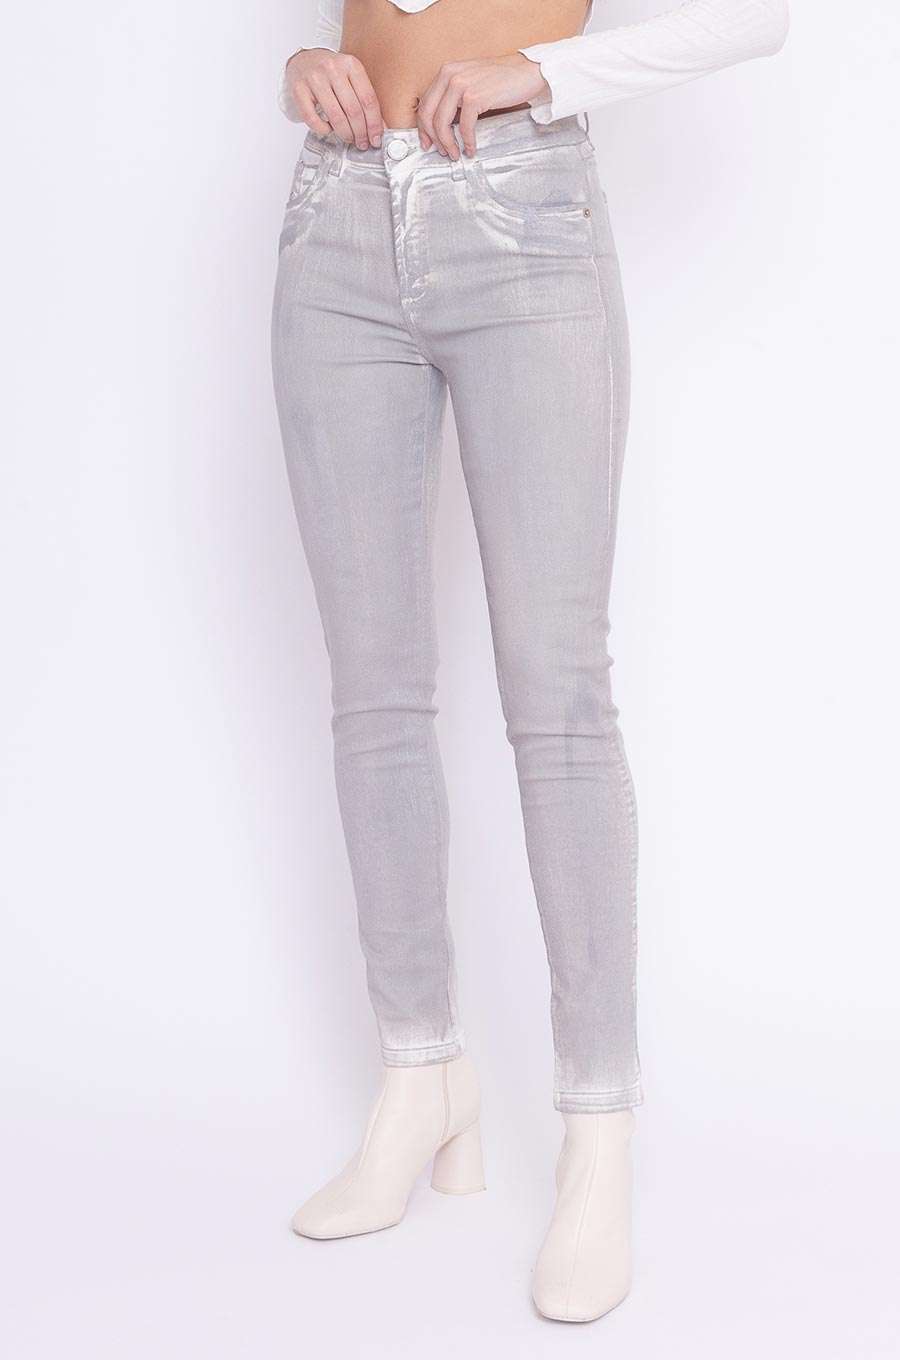 AF Jeans - A123220015 Jean Skinny Silver frente - Córdoba